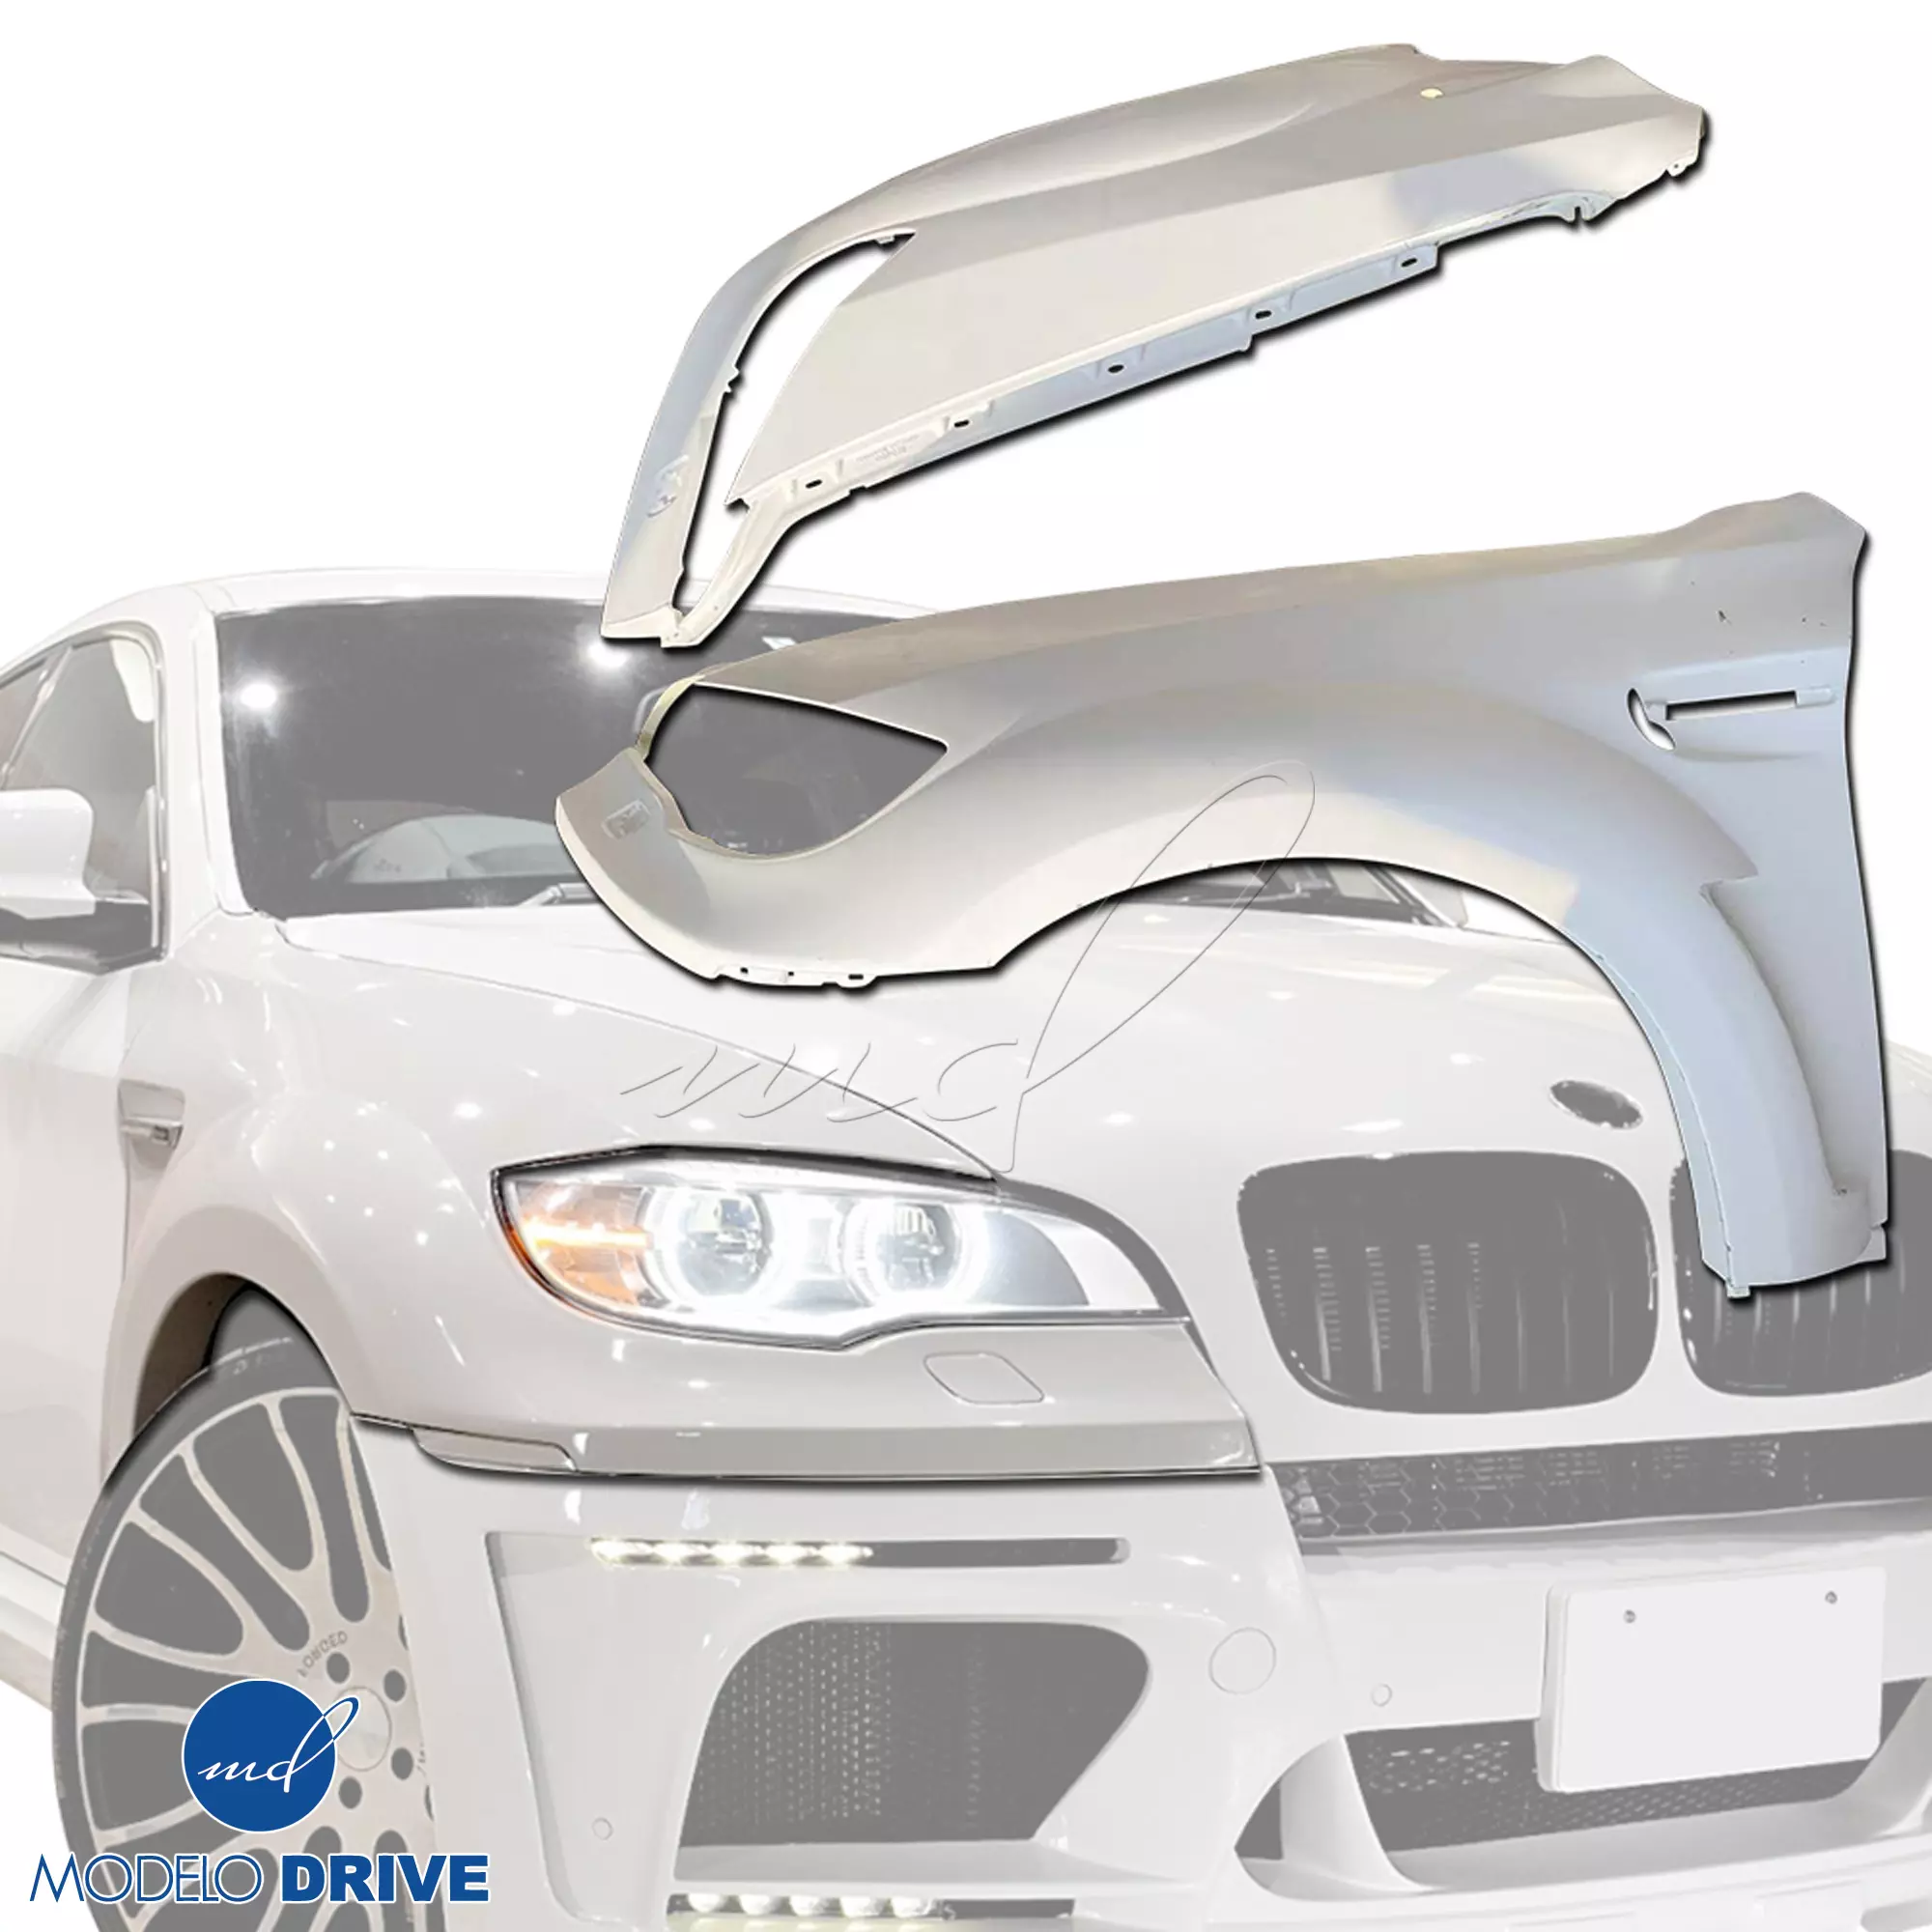 ModeloDrive FRP HAMA Wide Body Kit > BMW X6 E71 2008-2014 - Image 89